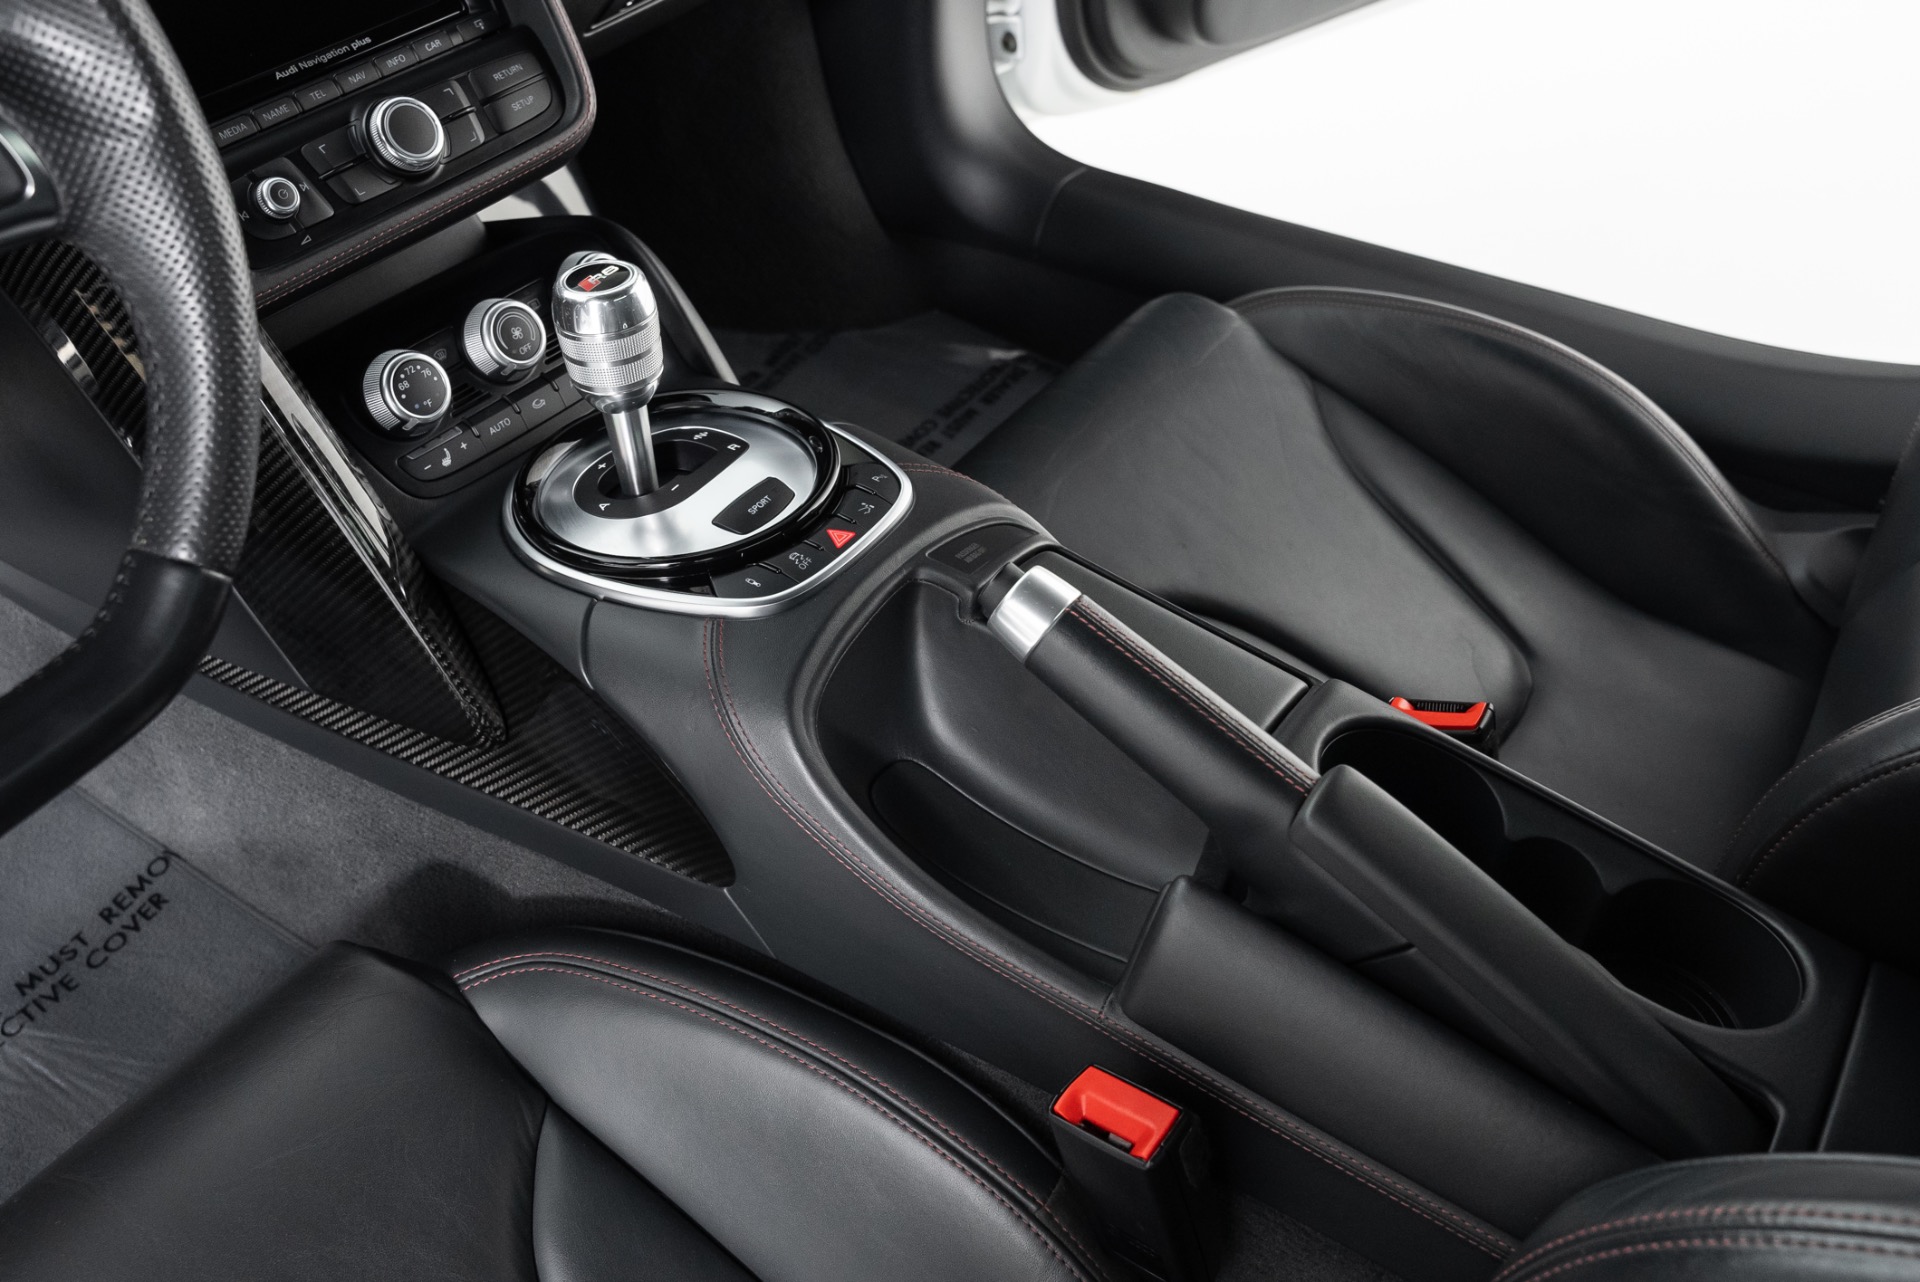 Used 2015 Audi R8 4.2 Quattro For Sale (Sold)